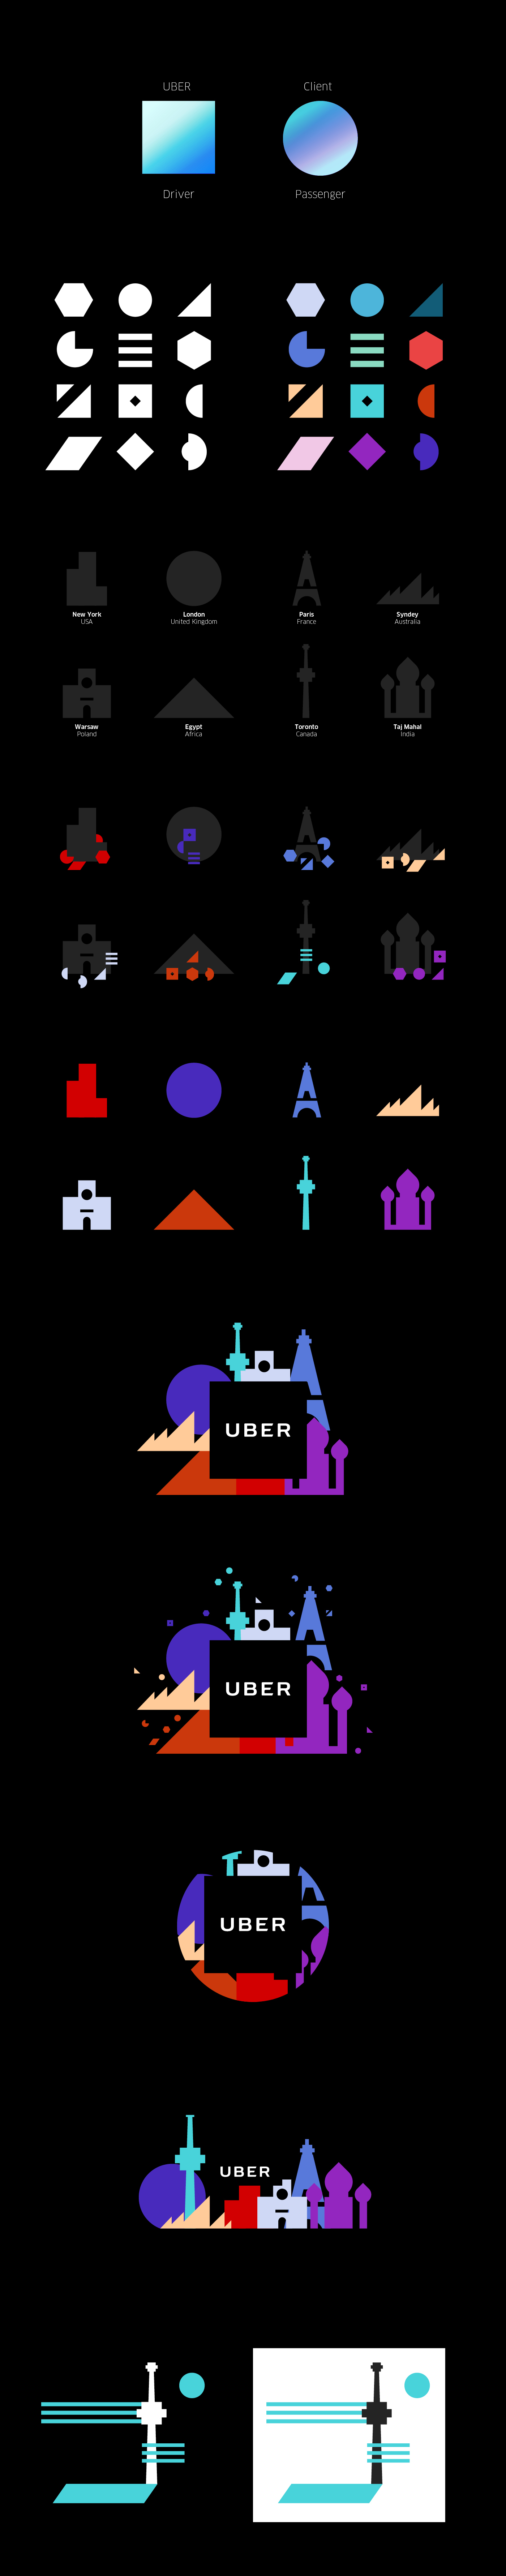 brand Uber usa New York taxi shape logo